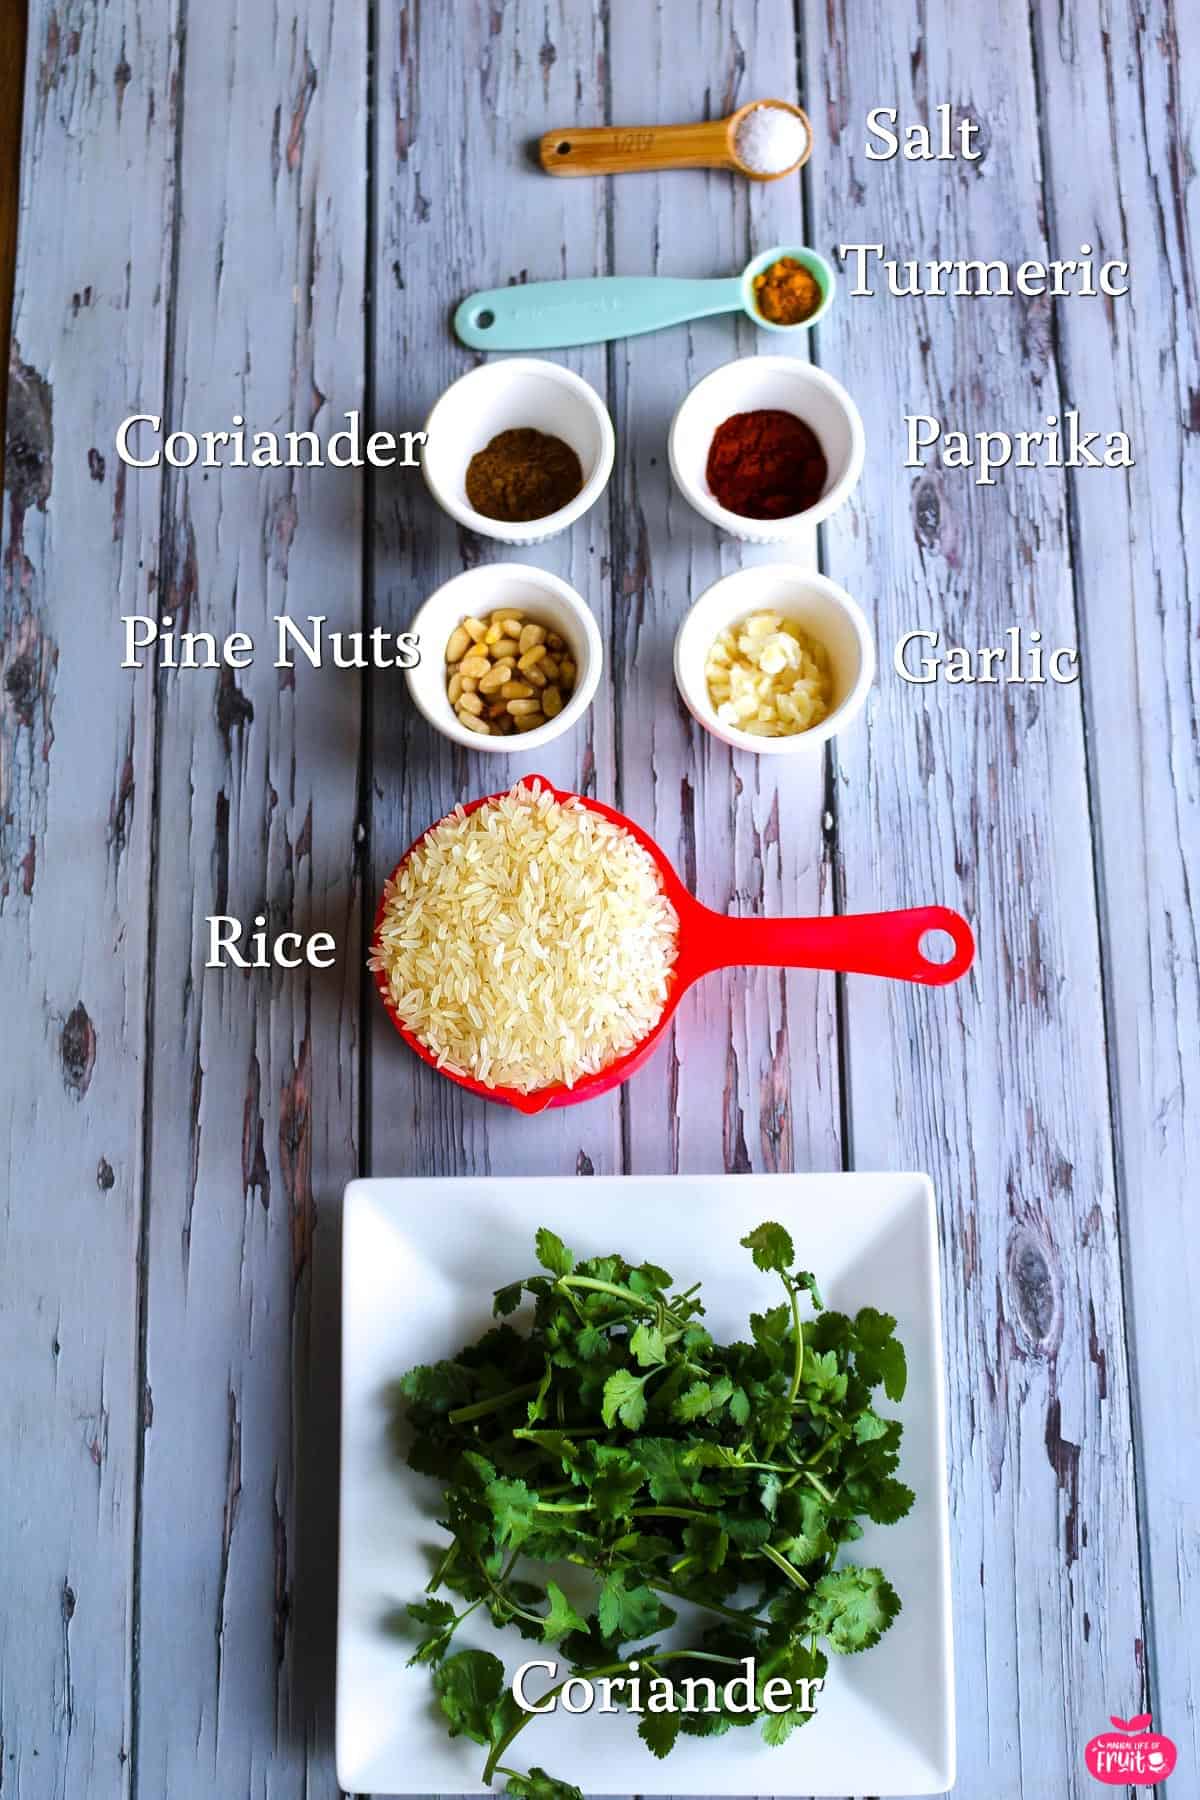 Ingredients for Easy Mediterranean Yellow Rice, salt, turmeric, paprika, garlic, coriander, rice, pine nuts & coriander powder.